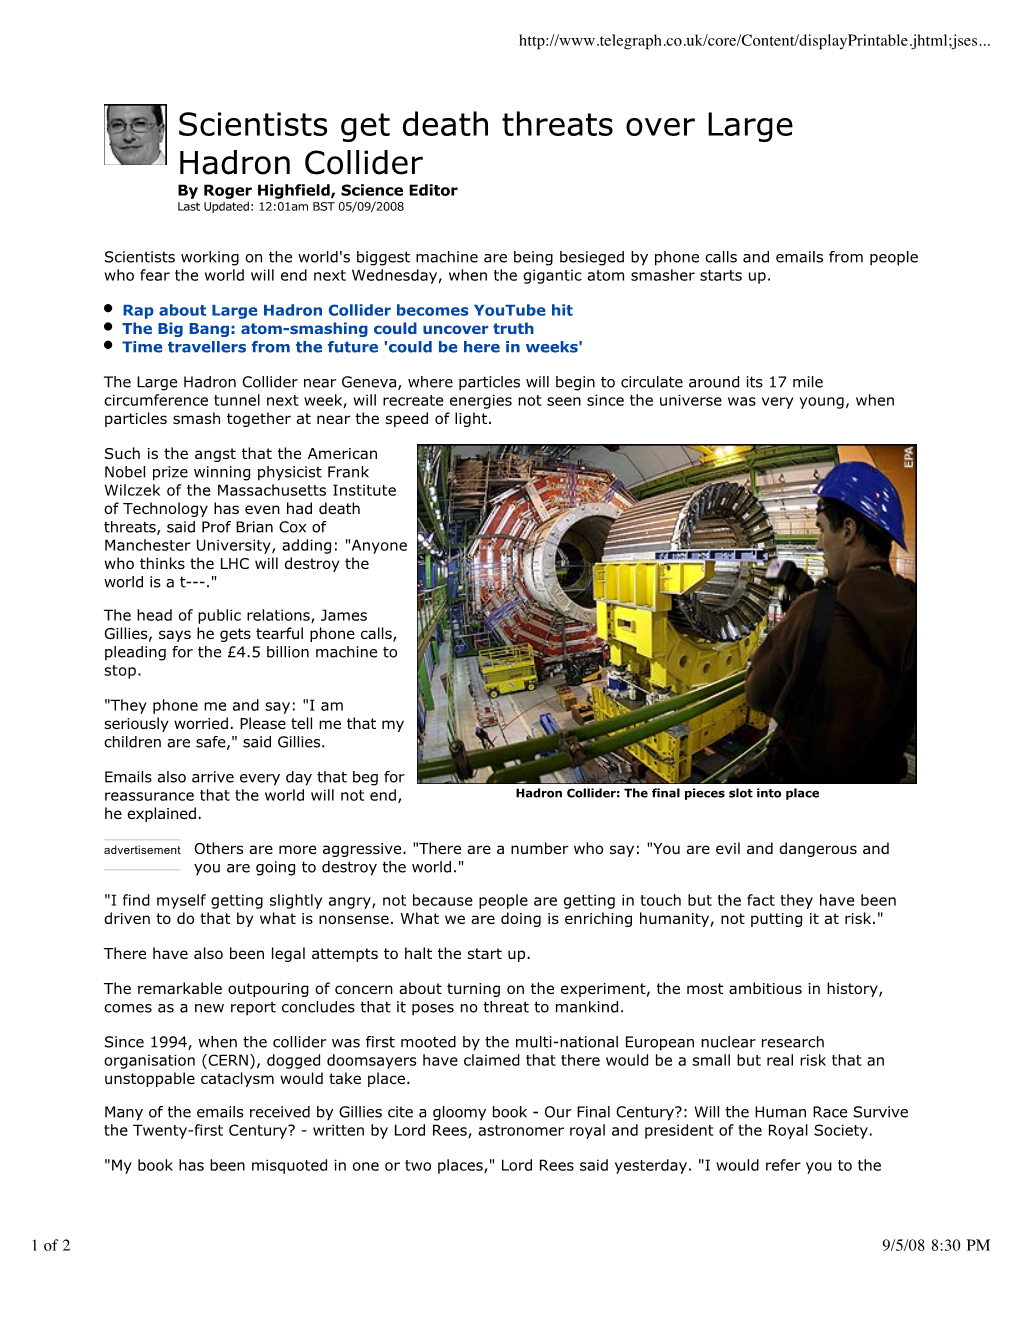 Large Hadron Collidor Death Threats